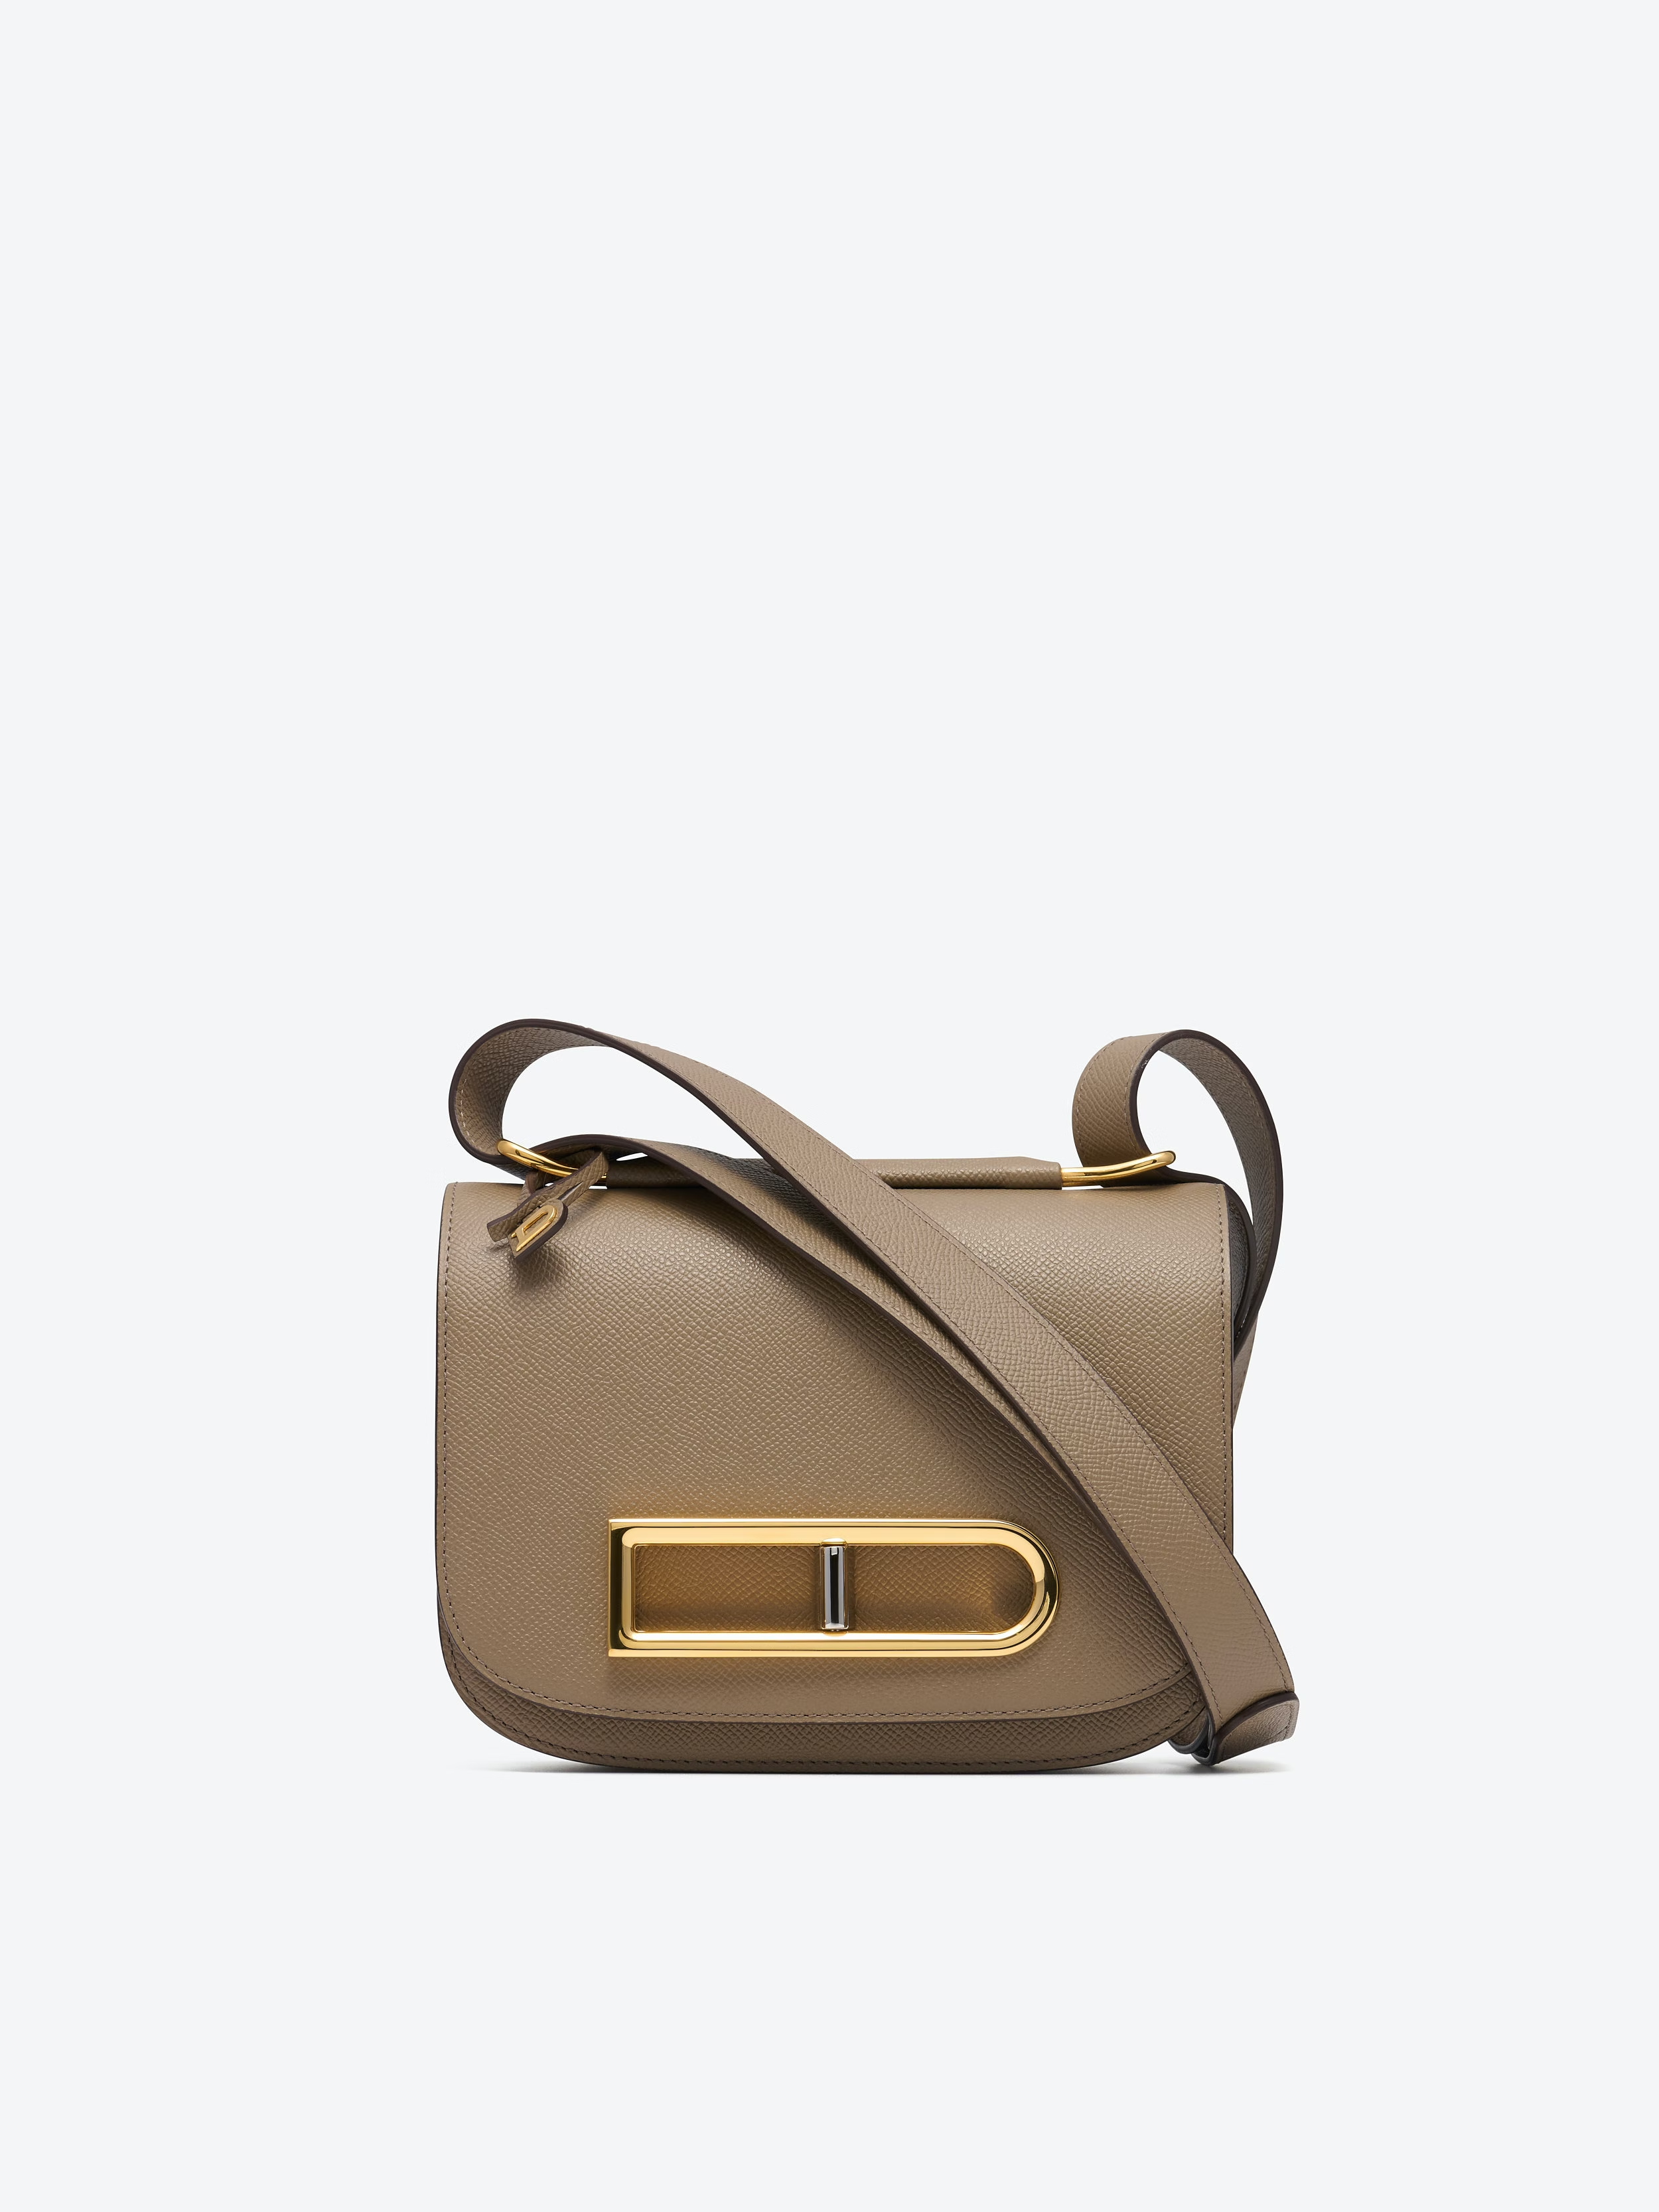 Comparing Delvaux's Cool box Sizes. #delvaux #handbags #fashion